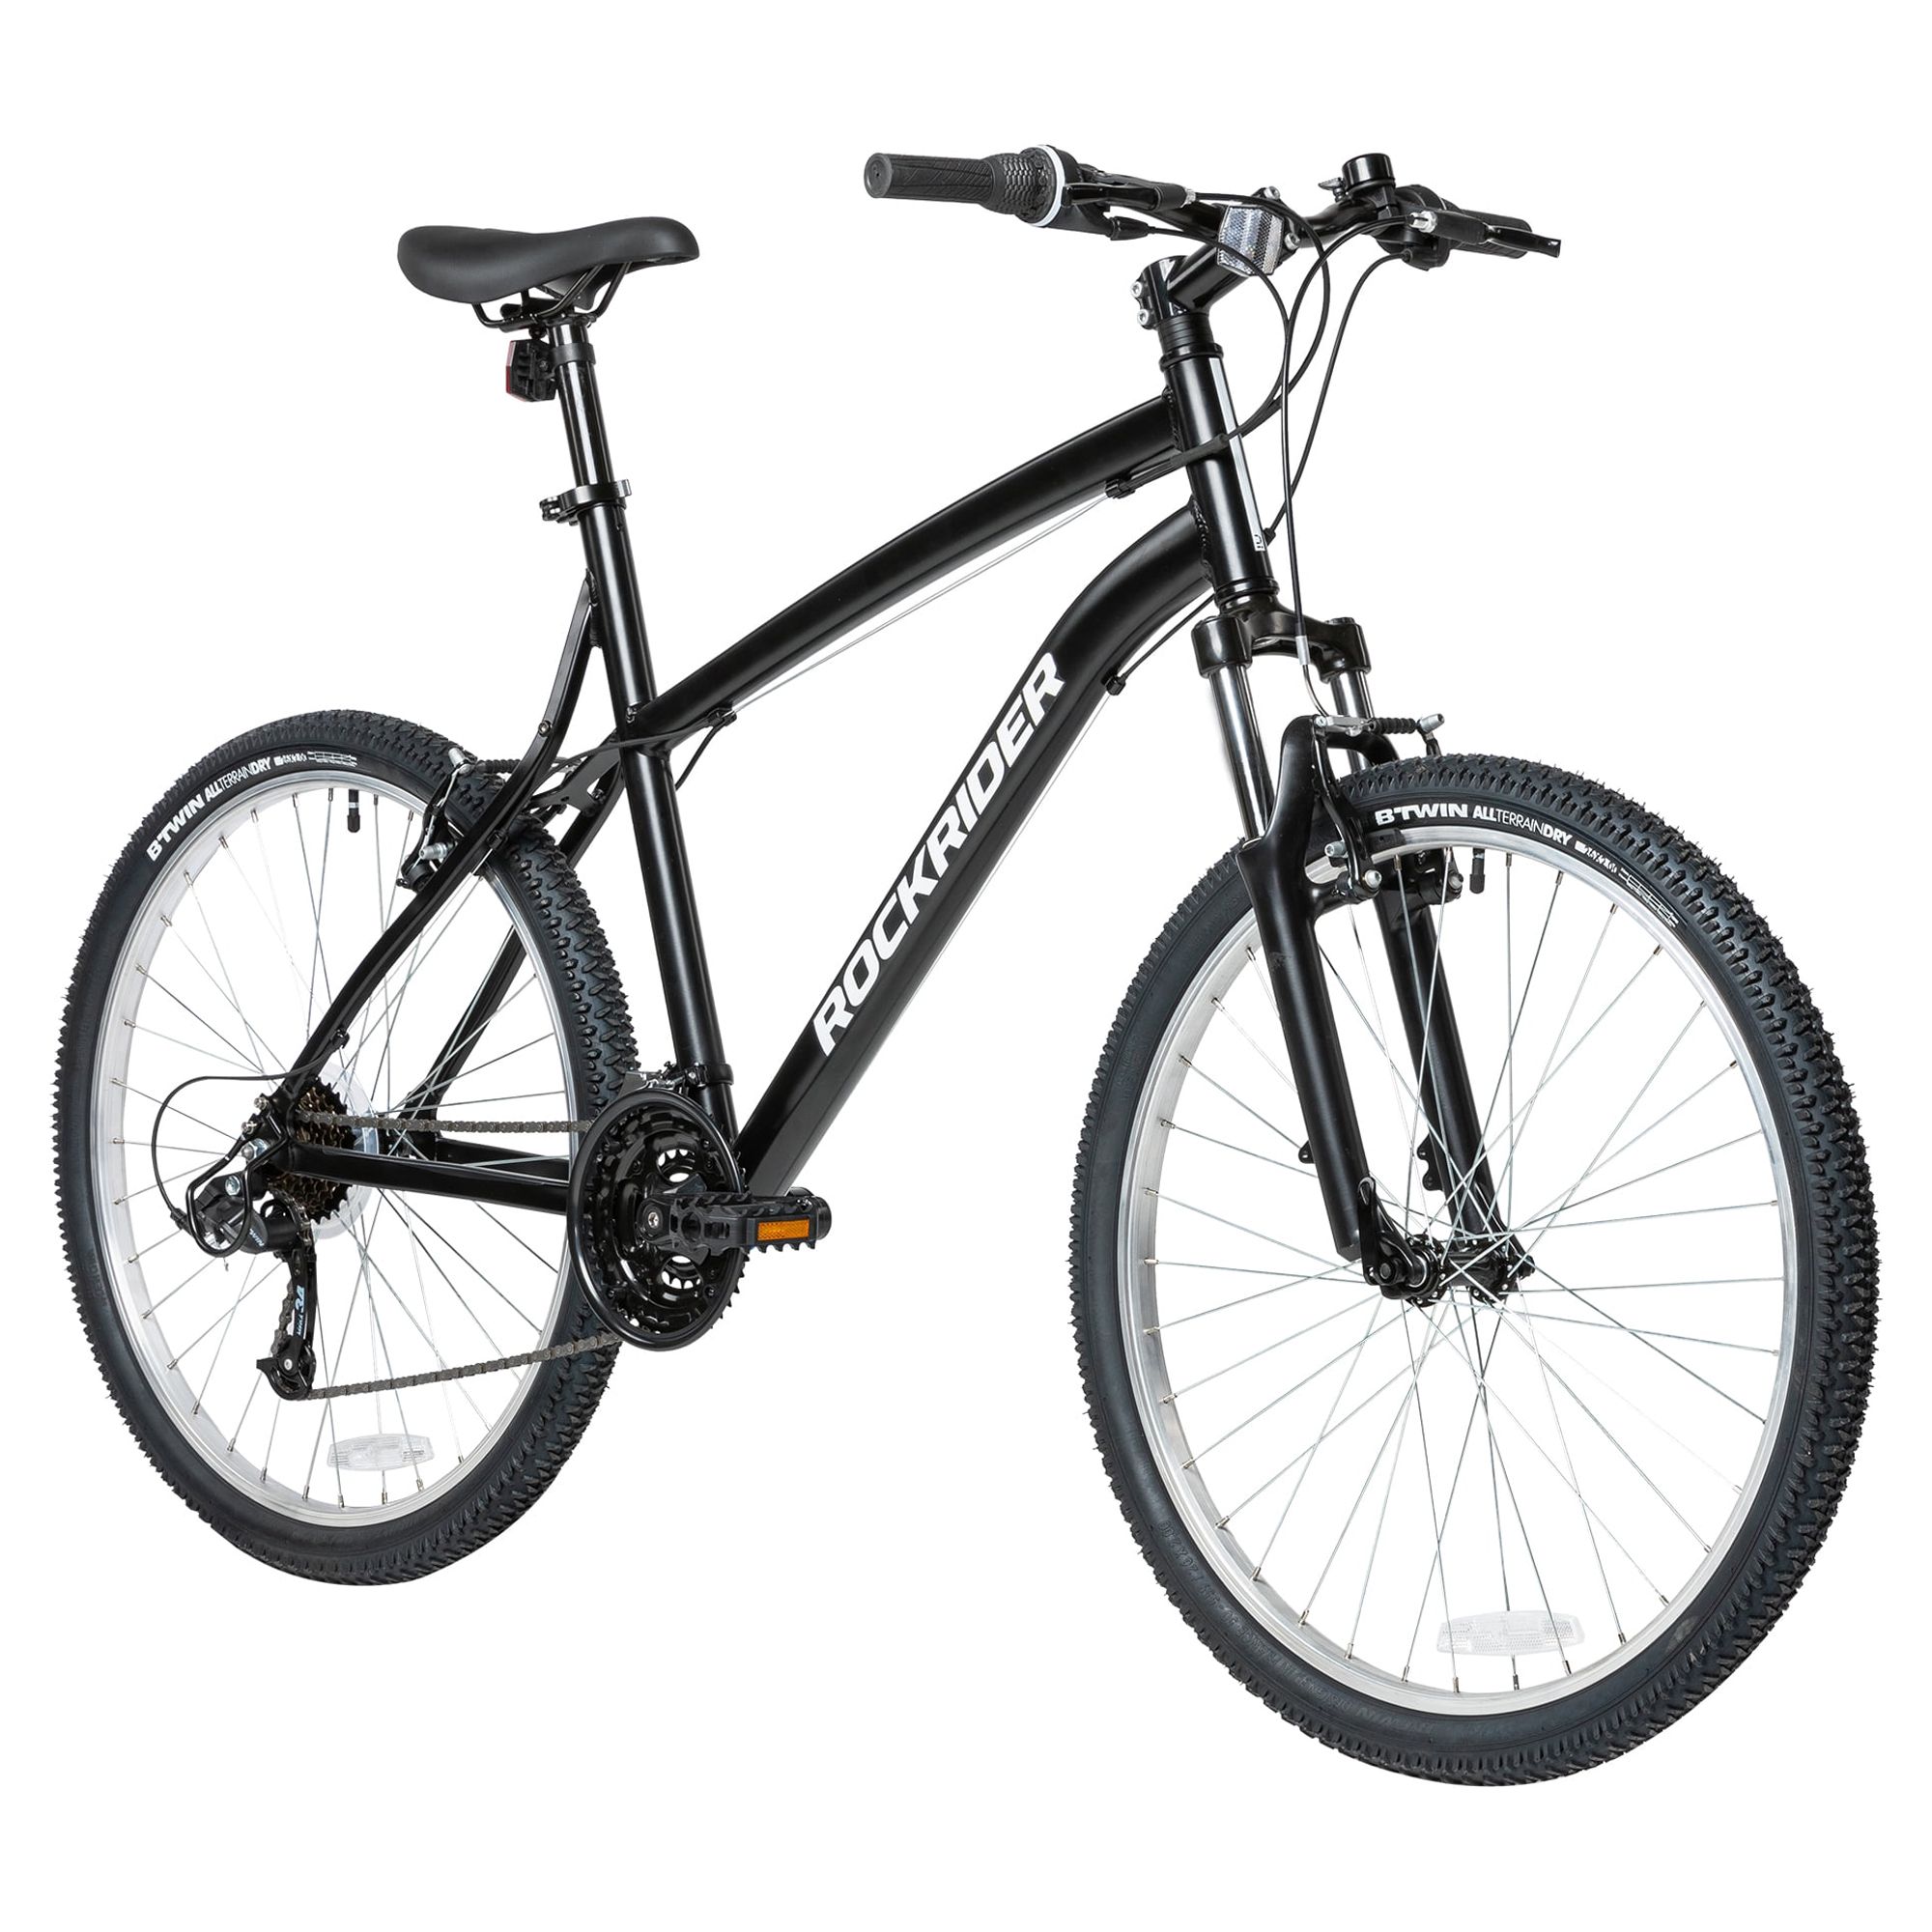 Decathlon Rockrider ST50, 21 Speed Aluminum Mountain Bike, 26", Unisex, Black, Small - image 1 of 14